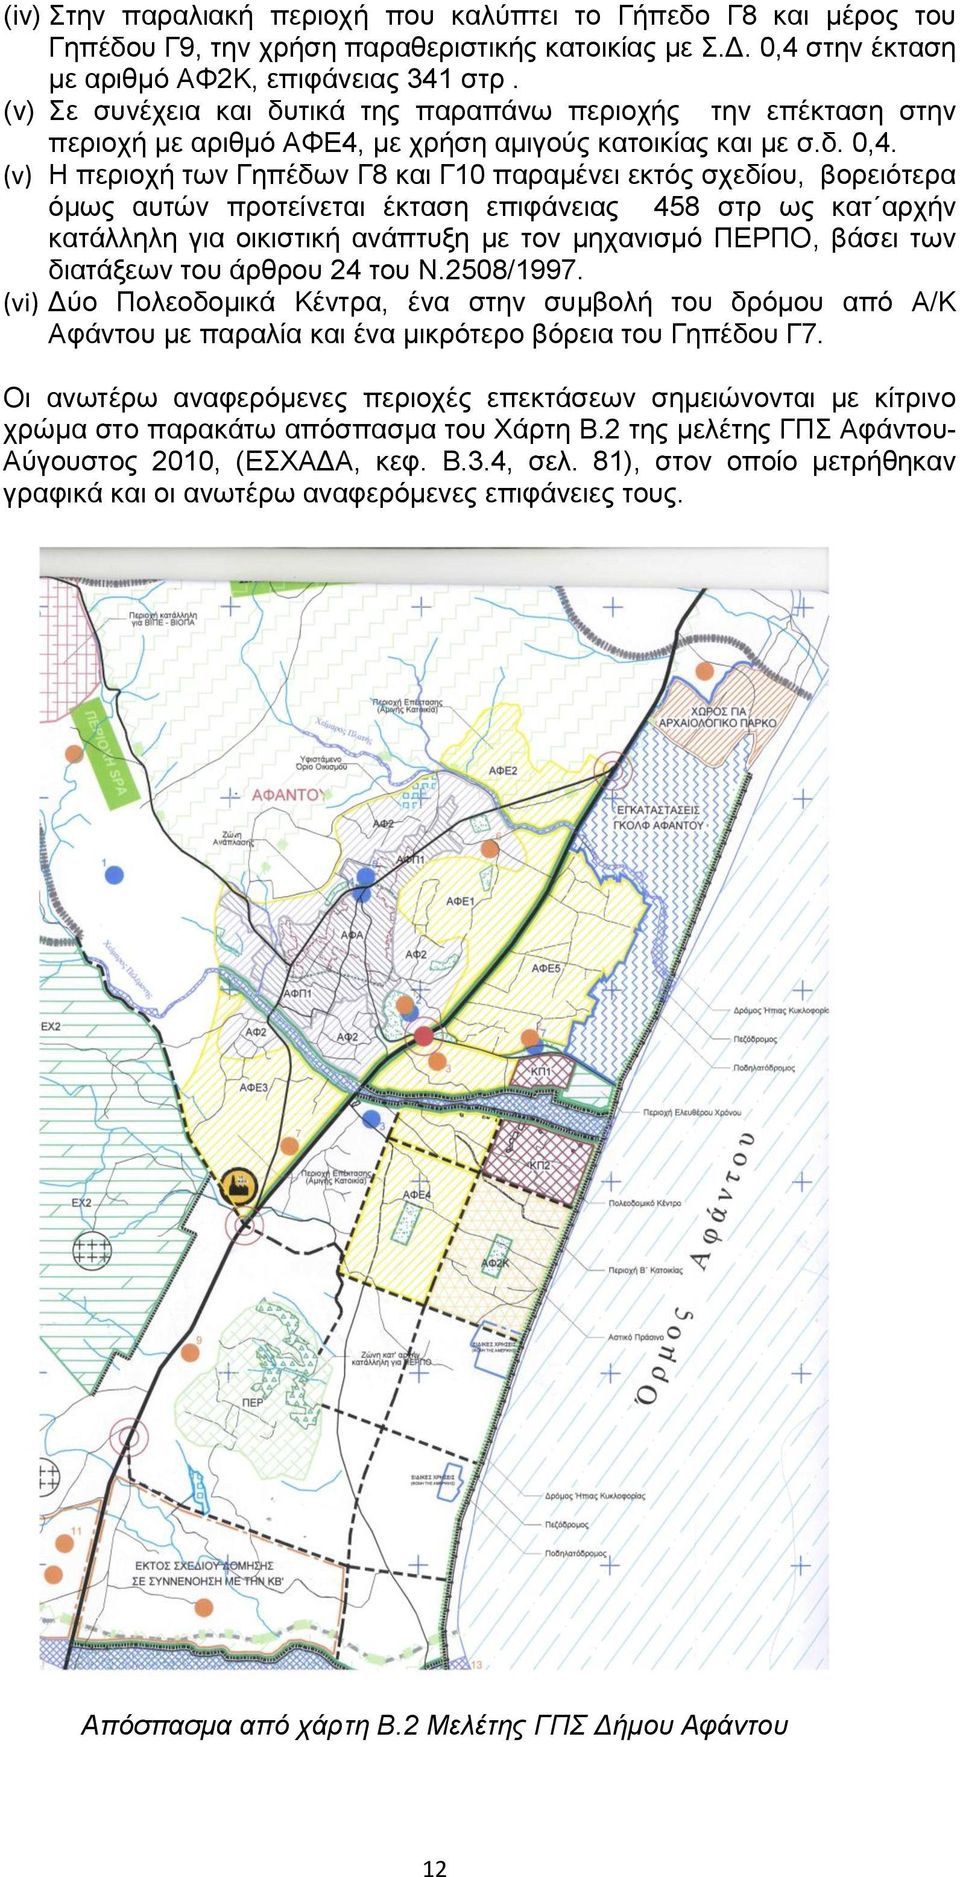 (v) Η περιοχή των Γηπέδων Γ8 και Γ10 παραμένει εκτός σχεδίου, βορειότερα όμως αυτών προτείνεται έκταση επιφάνειας 458 στρ ως κατ αρχήν κατάλληλη για οικιστική ανάπτυξη με τον μηχανισμό ΠΕΡΠΟ, βάσει